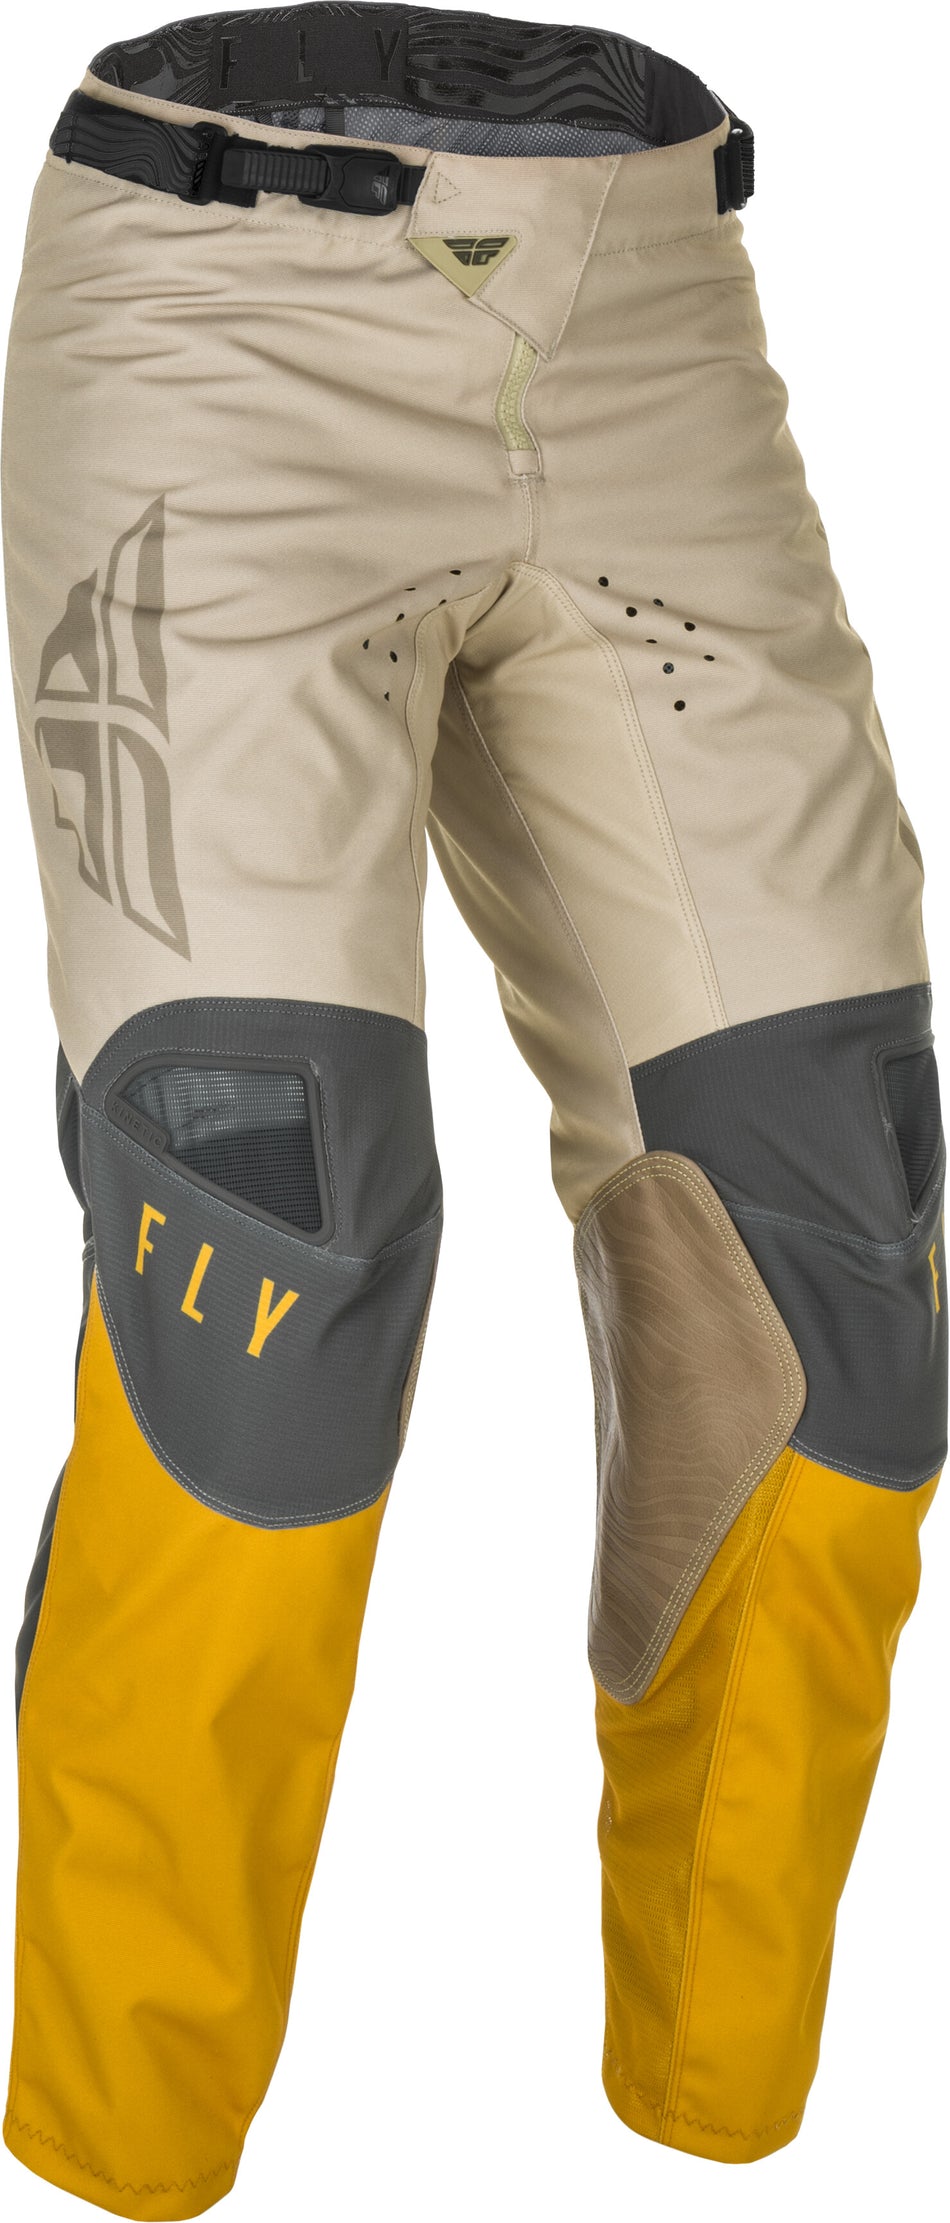 FLY RACING Kinetic K121 Pants Mustard/Stone/Grey Sz 36 374-43336